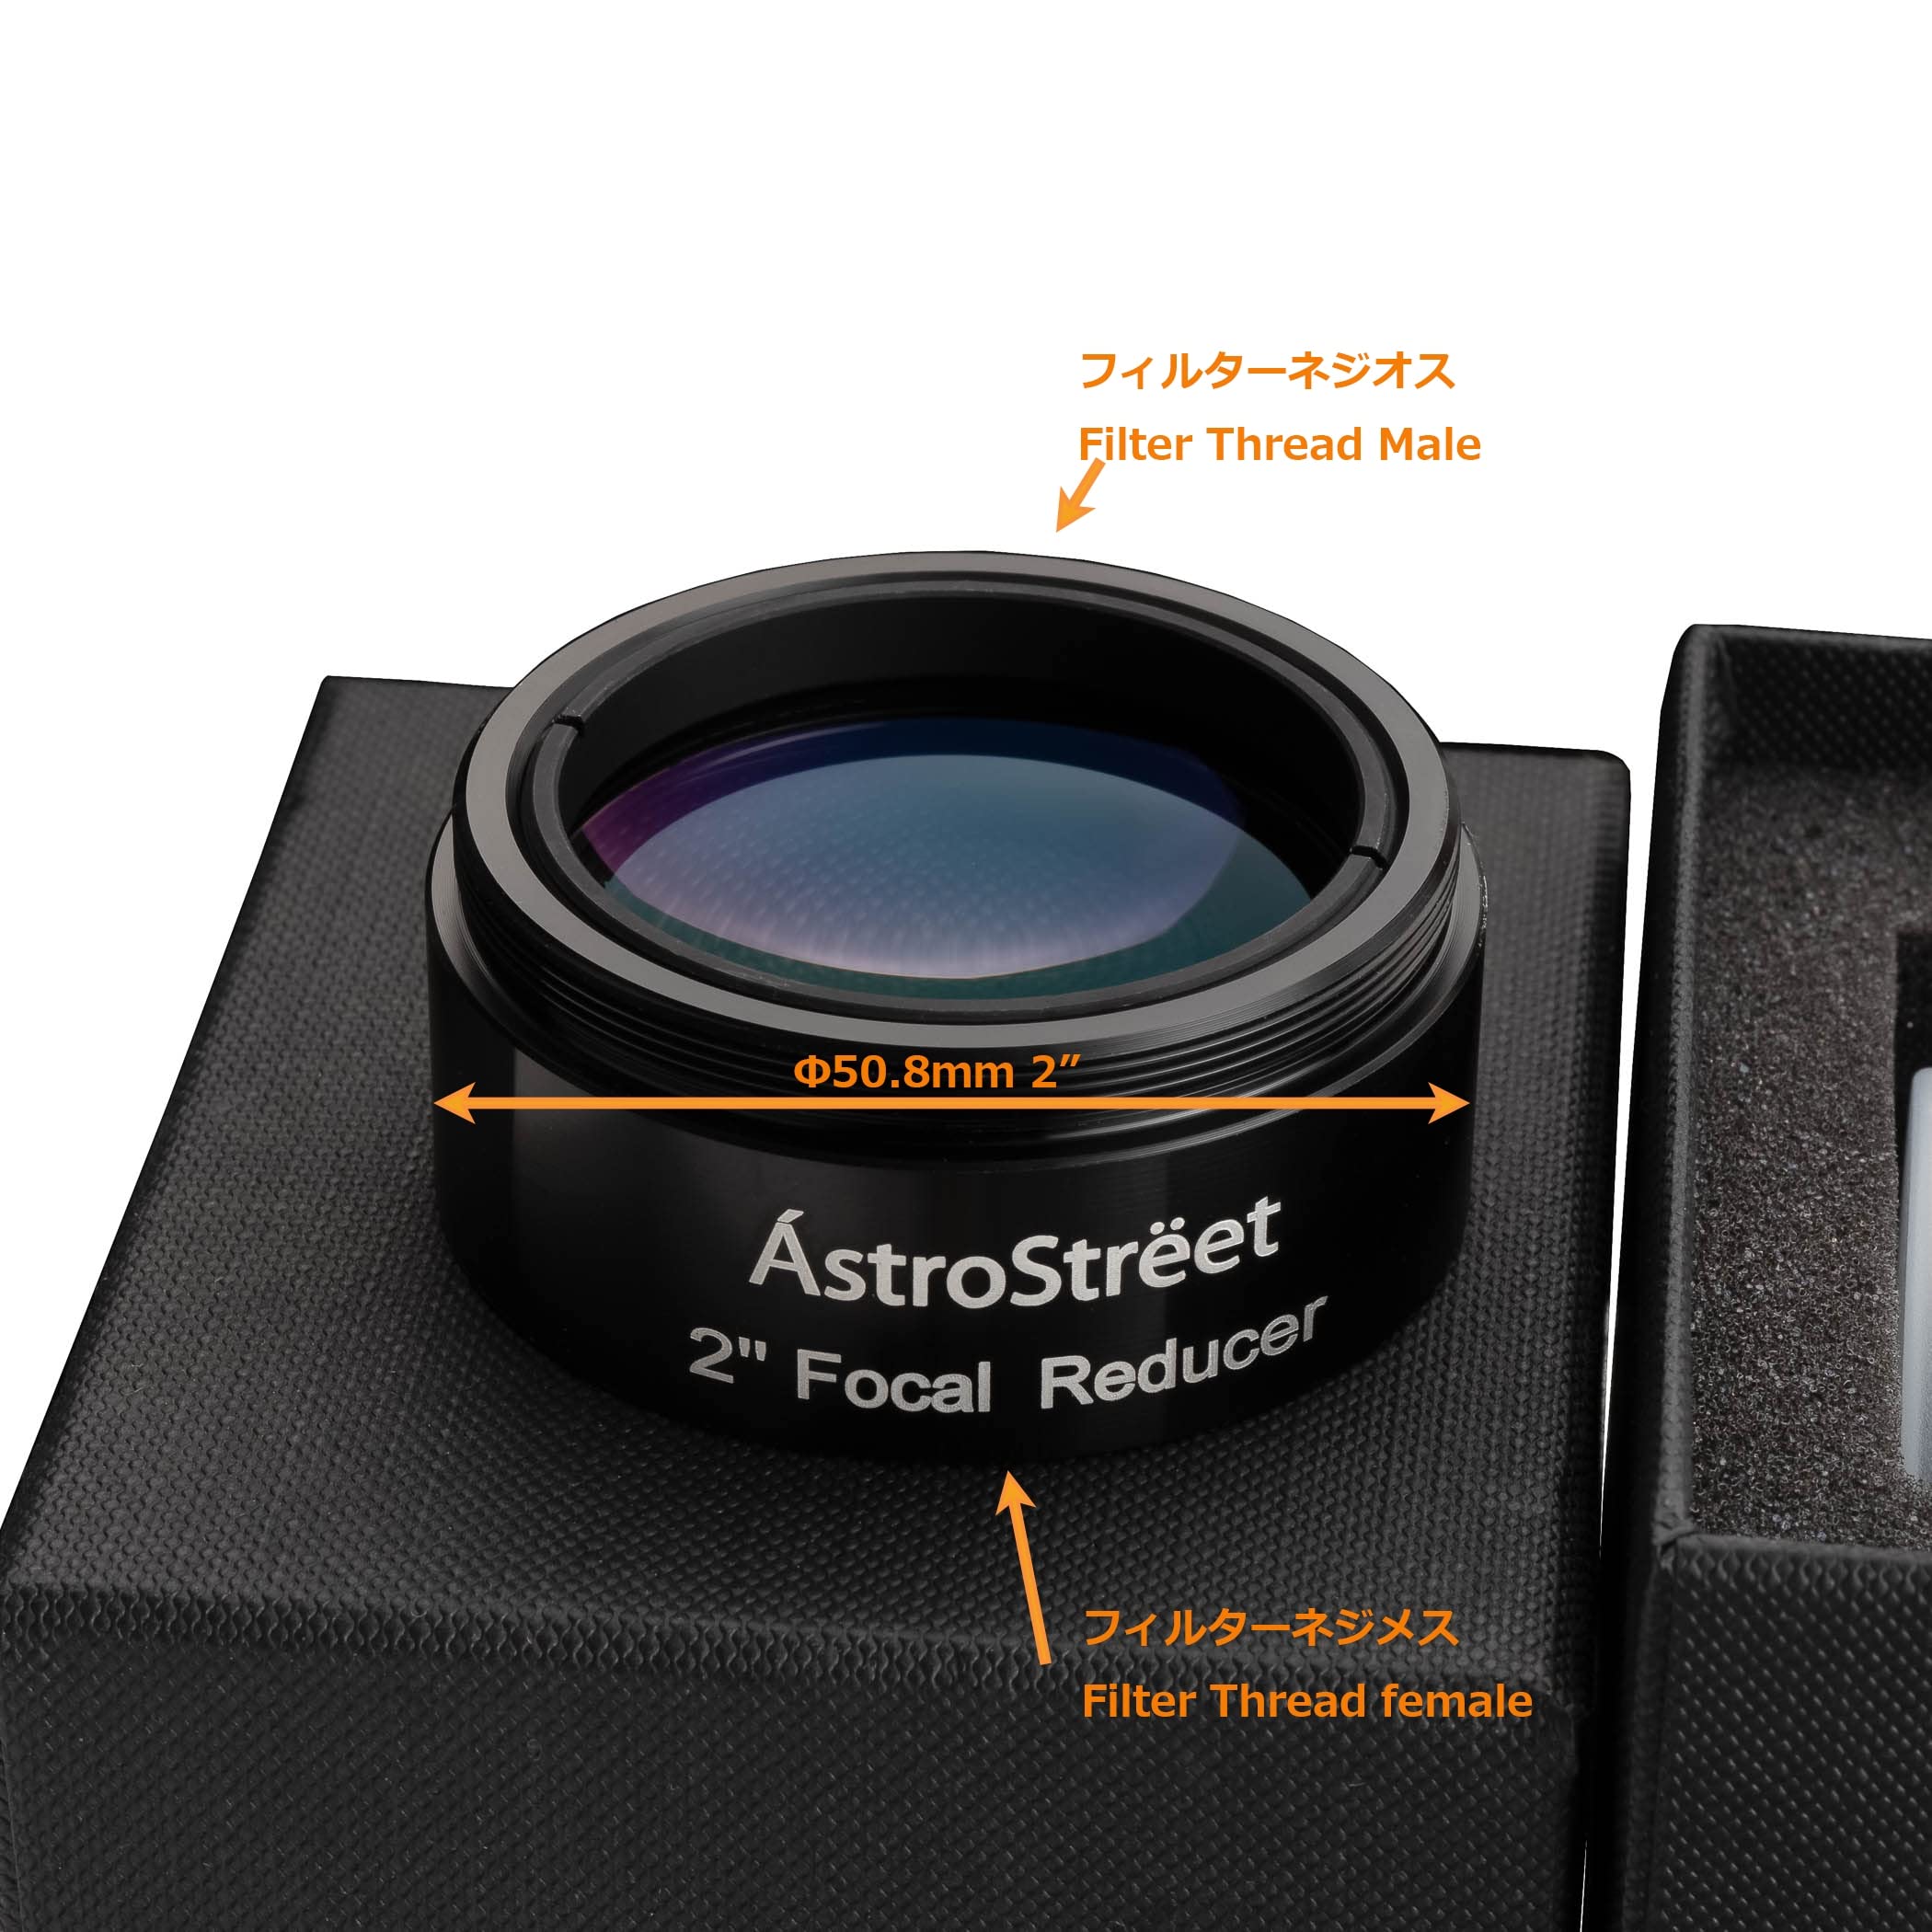 AstroStreet GSO 0.5X Focal Reducer, 2